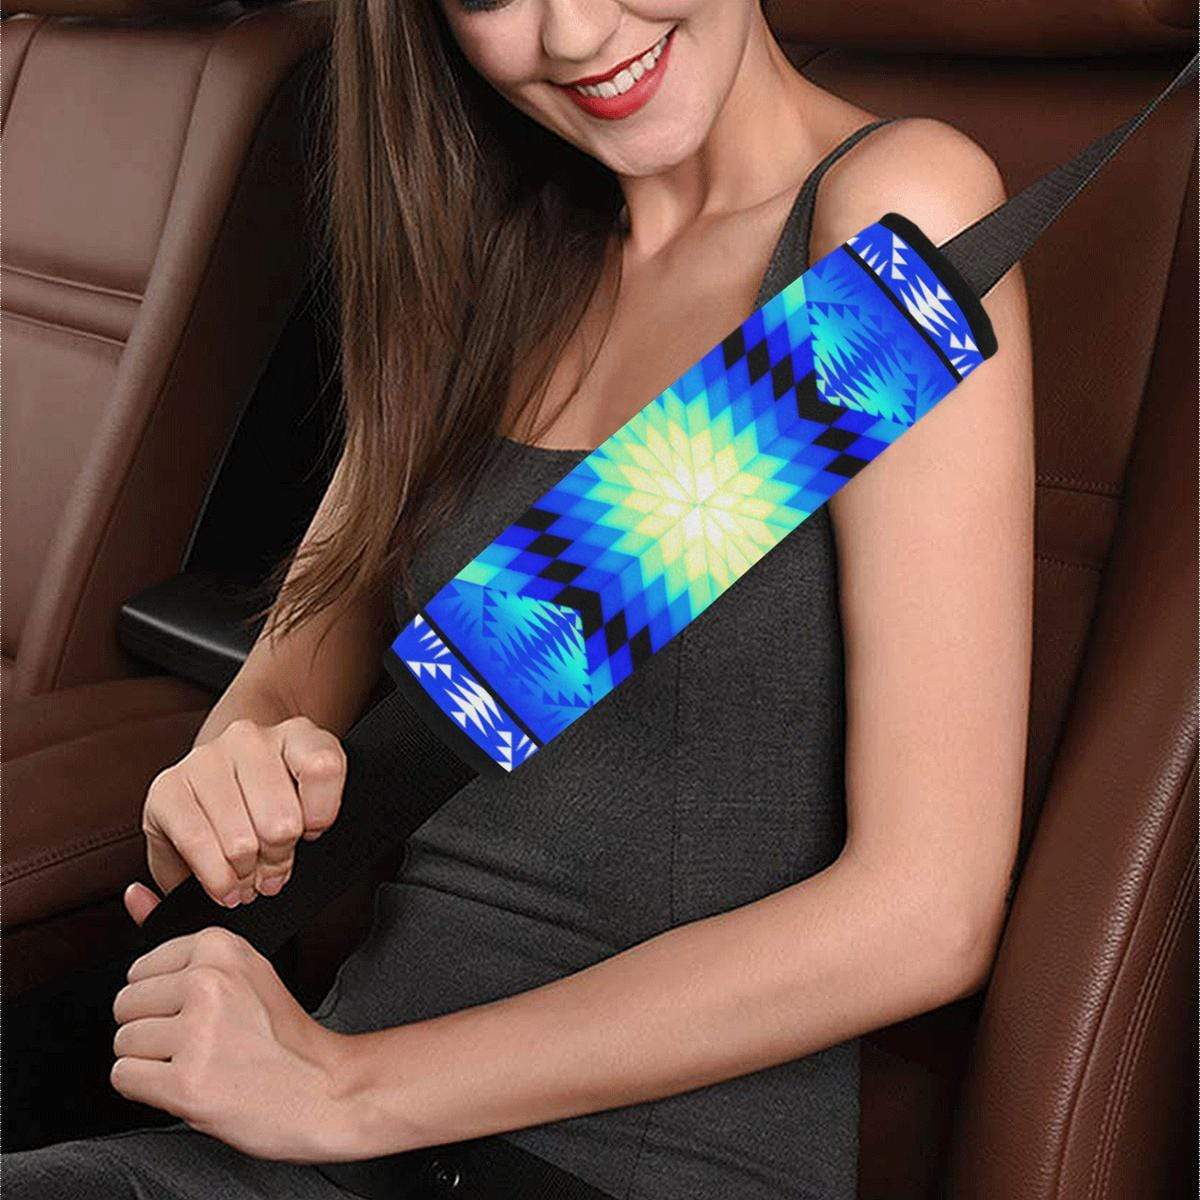 Blue Ridge Star Quilt Car Seat Belt Cover 7''x12.6'' Car Seat Belt Cover 7''x12.6'' e-joyer 